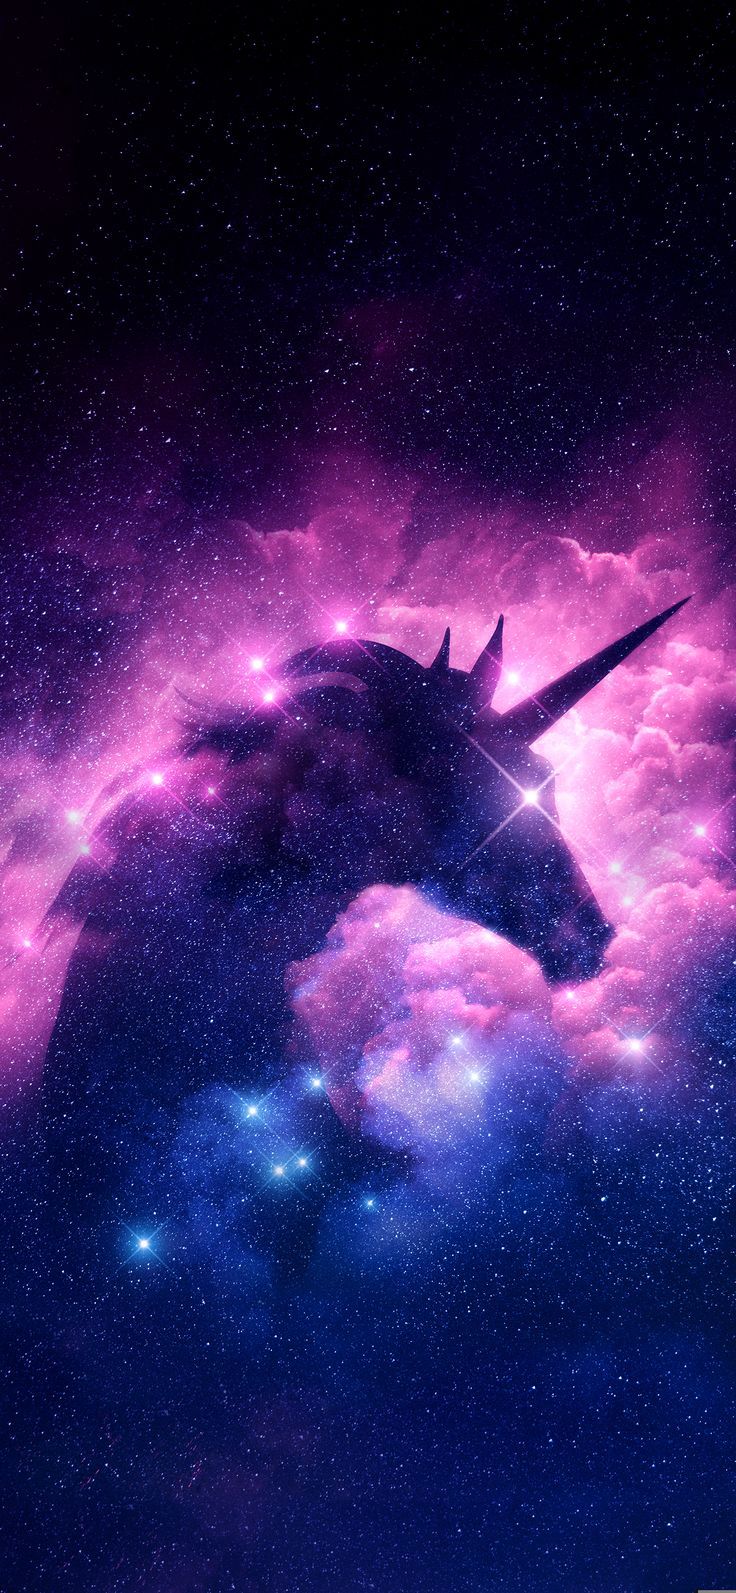 Free download unicorn wallpaper Iphone wallpaper unicorn Galaxy ...